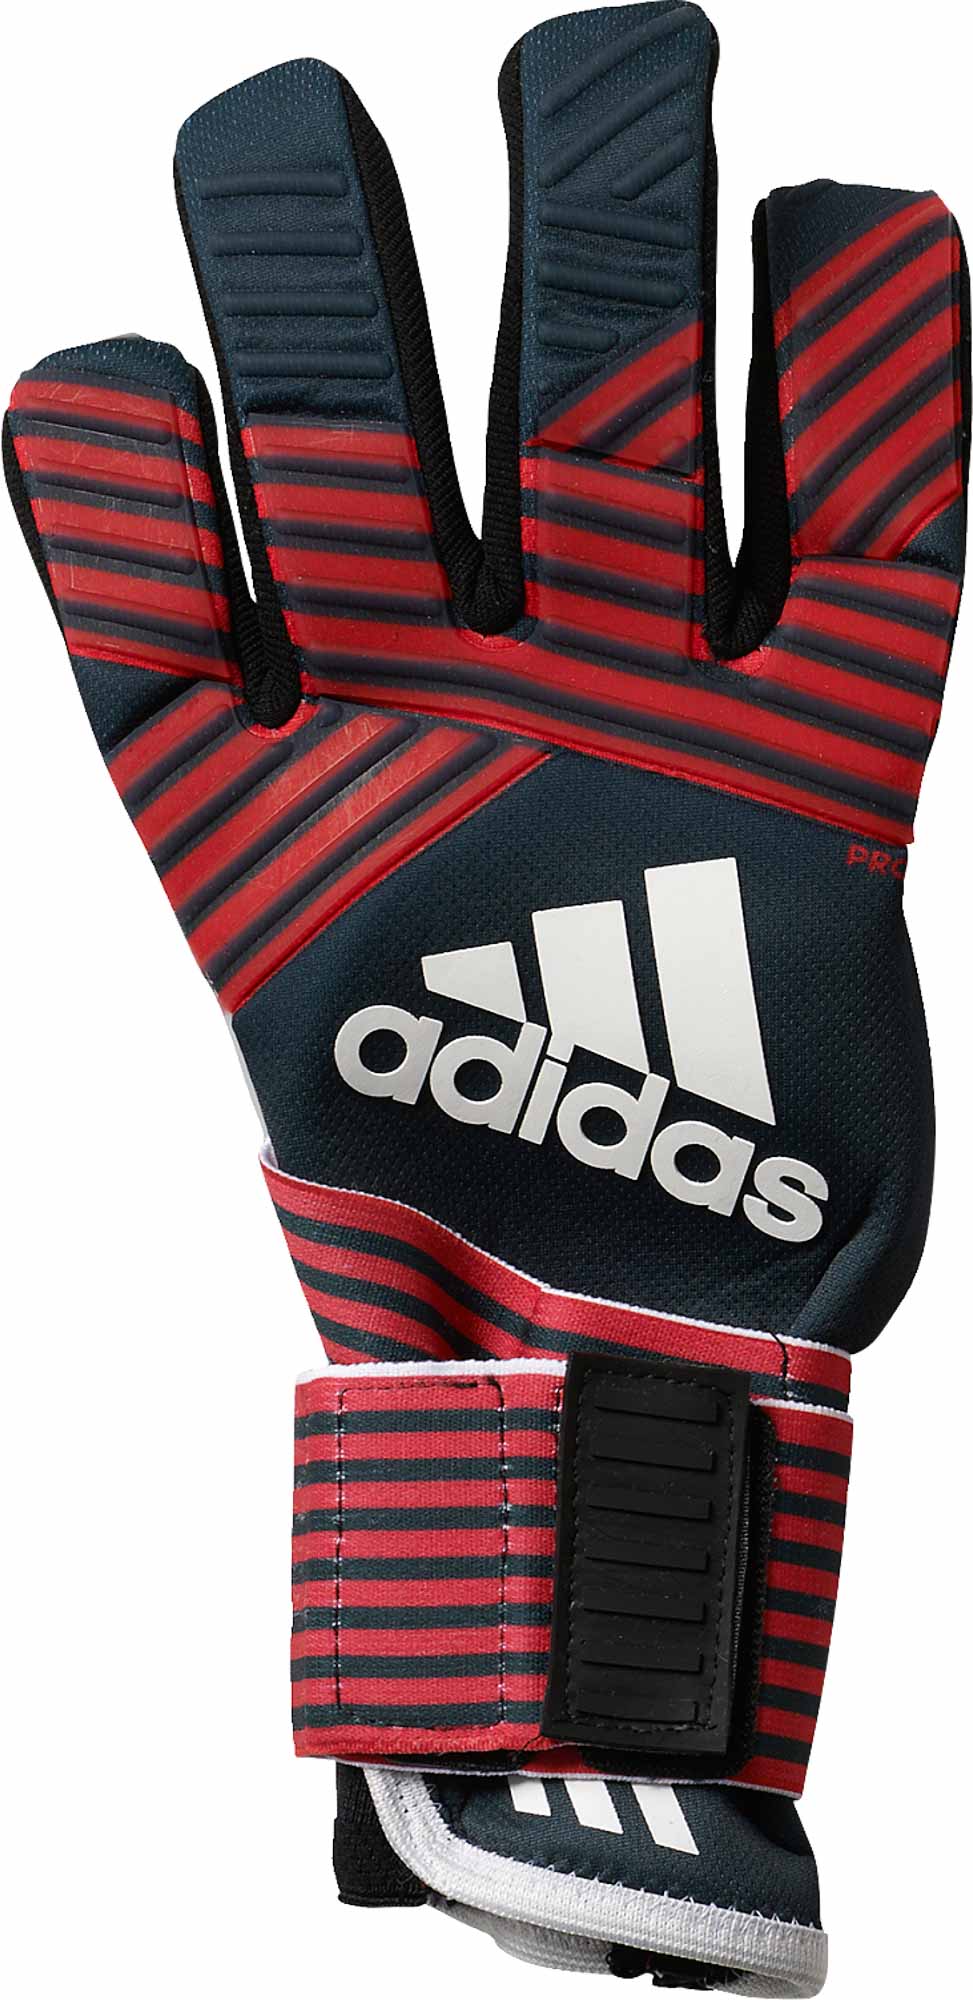 manuel neuer goalie gloves